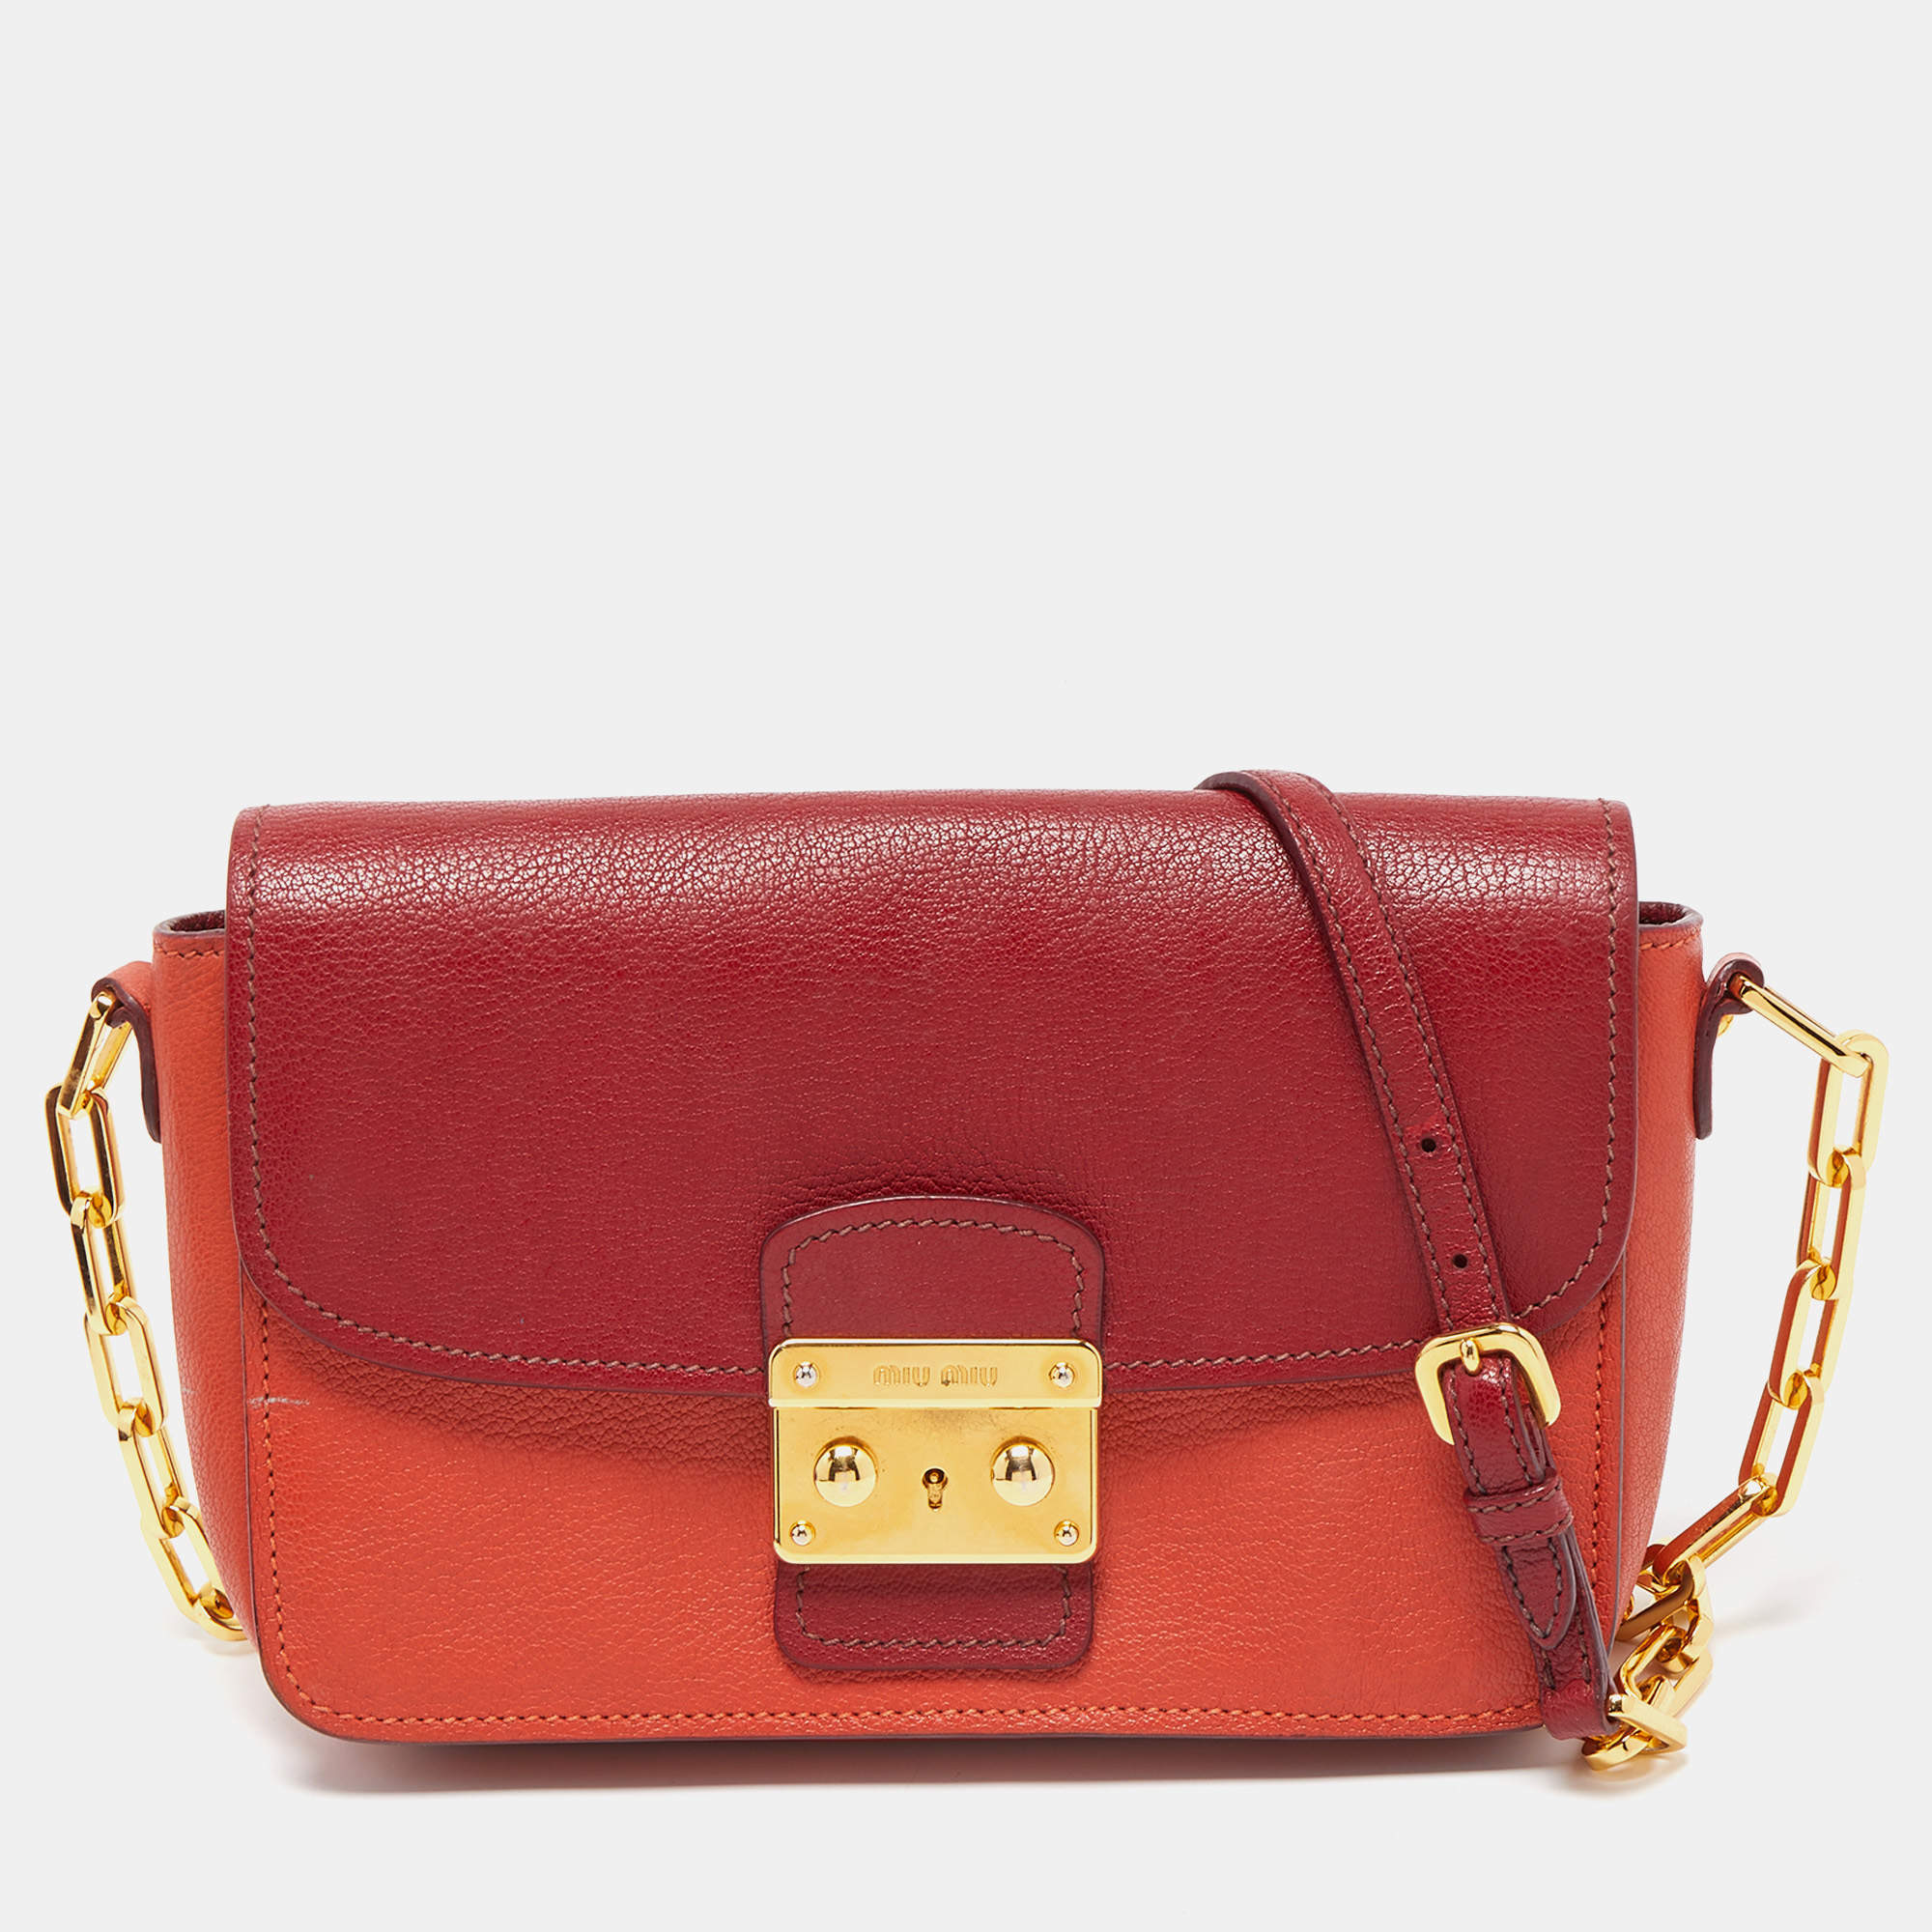 Miu Miu Orange/Red Madras Leather Pushlock Flap Chain Shoulder Bag Miu Miu